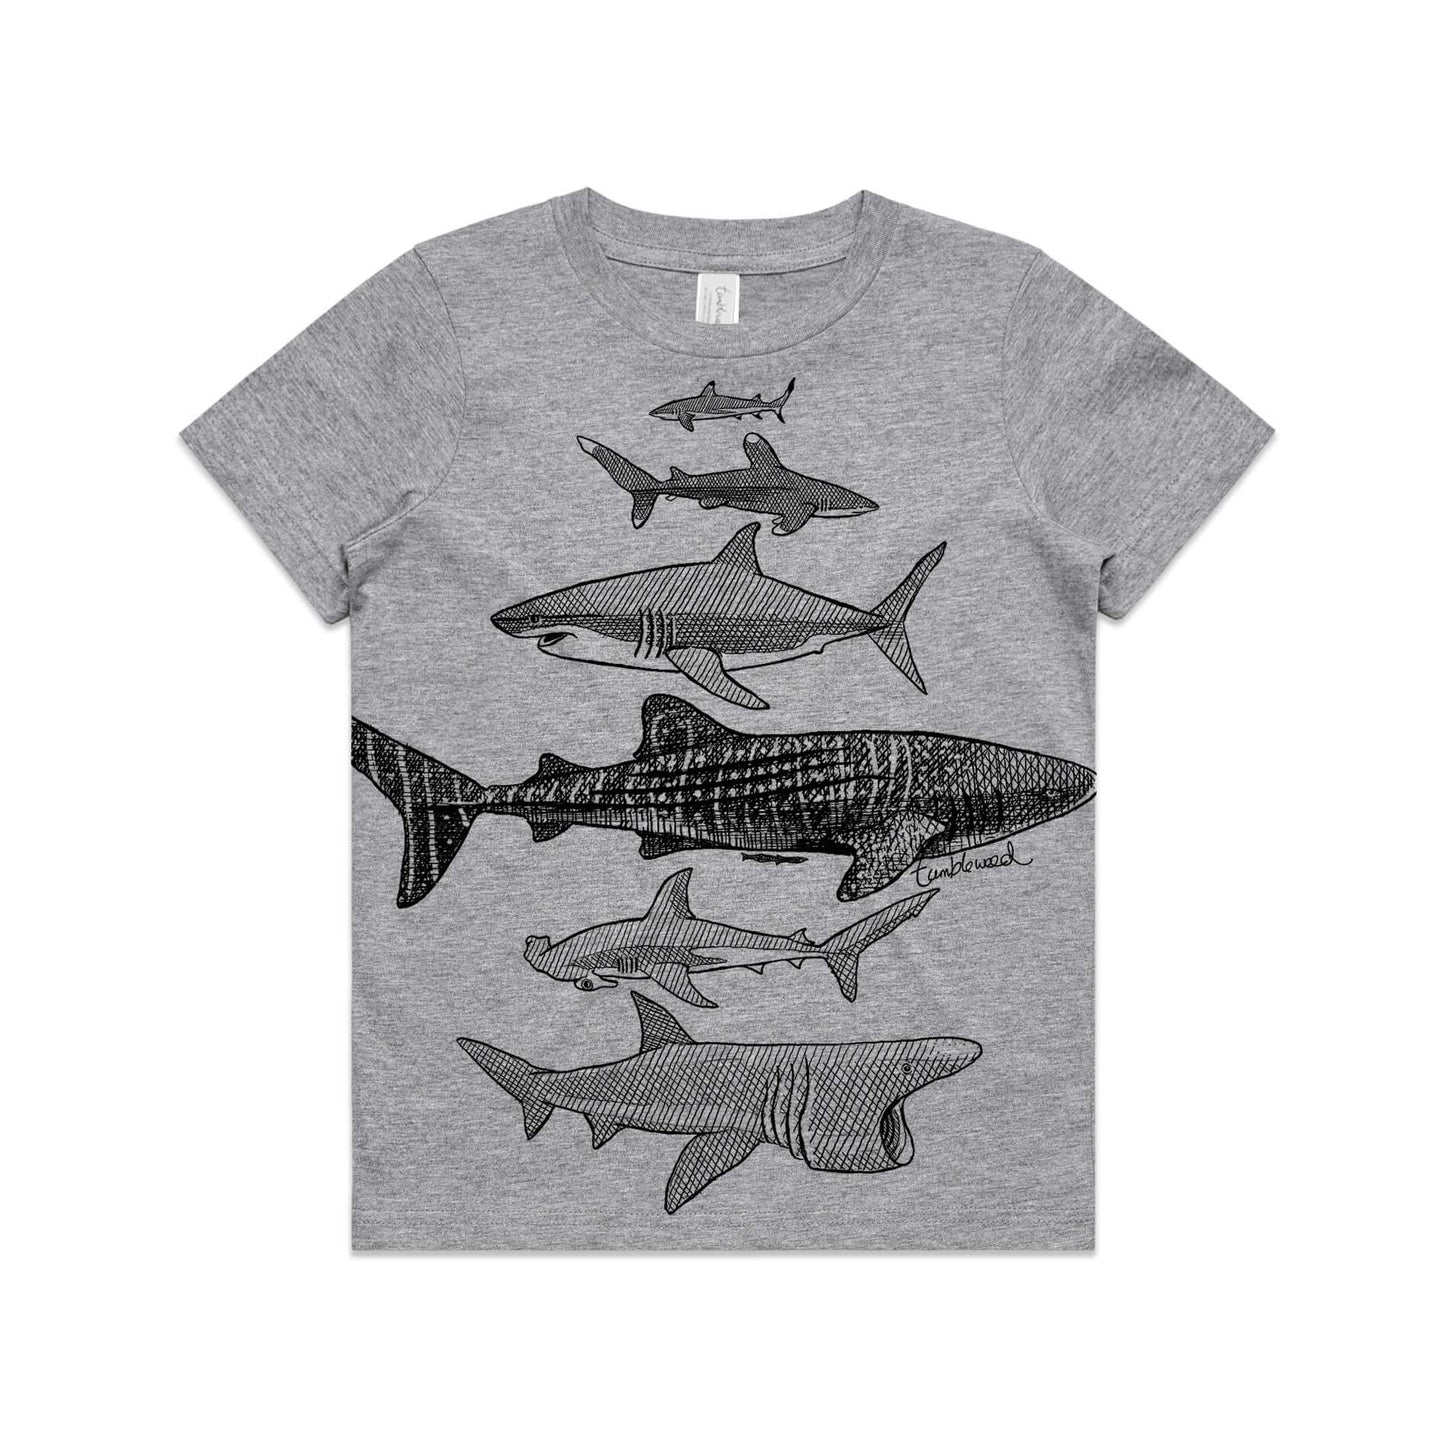 Grey marle, cotton kids' t-shirt with screen printed Kids shark design.